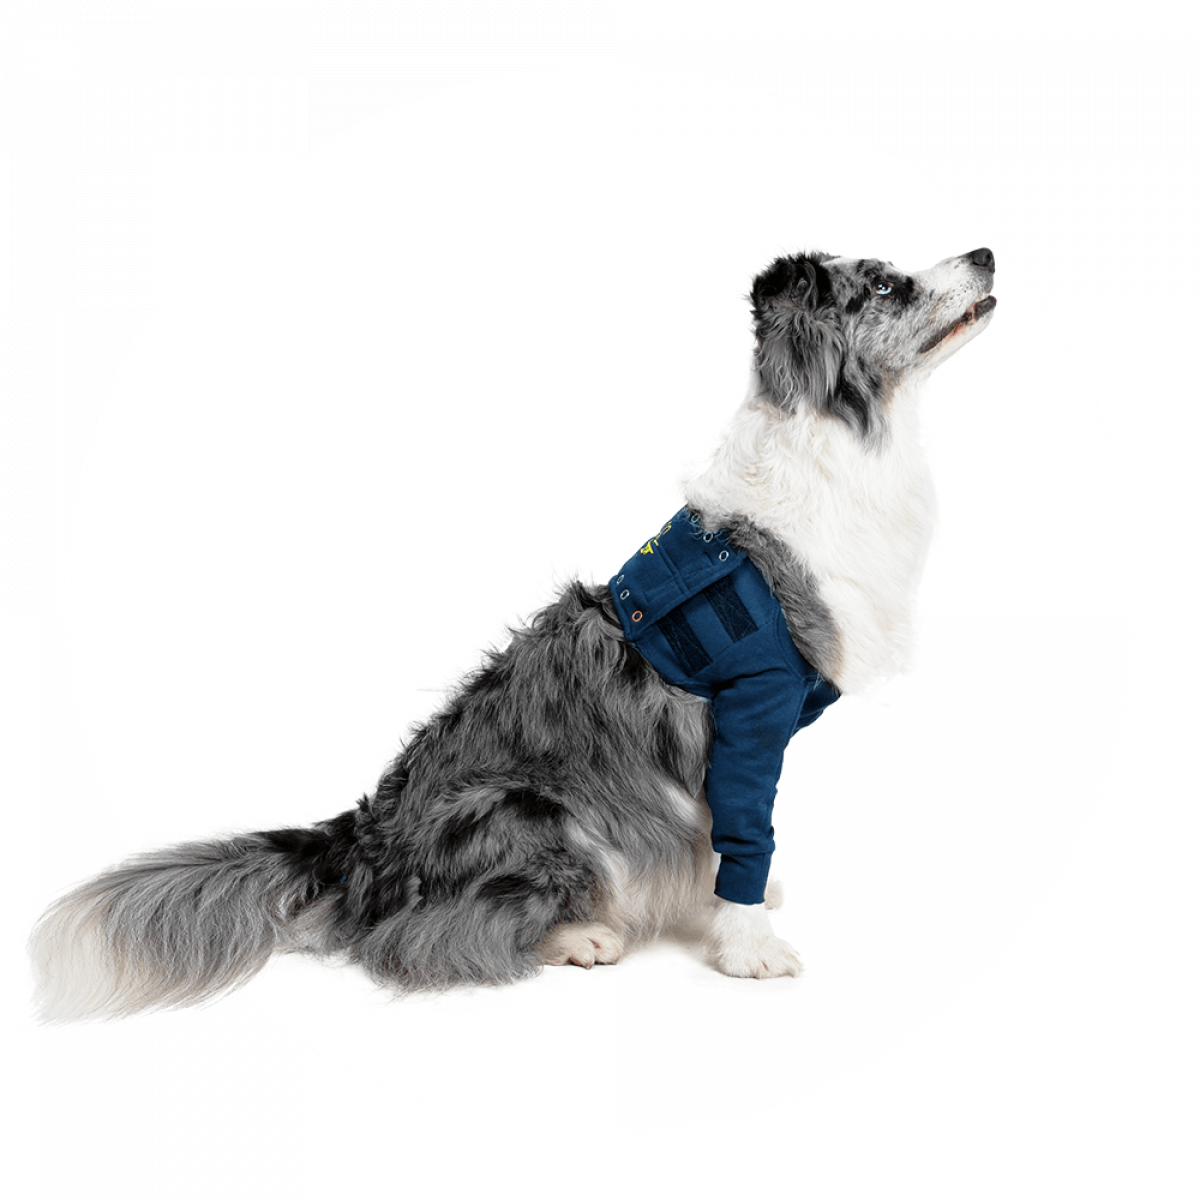 Medical Pet Shirt Shirt Front Leg TAZ Dog Blue 